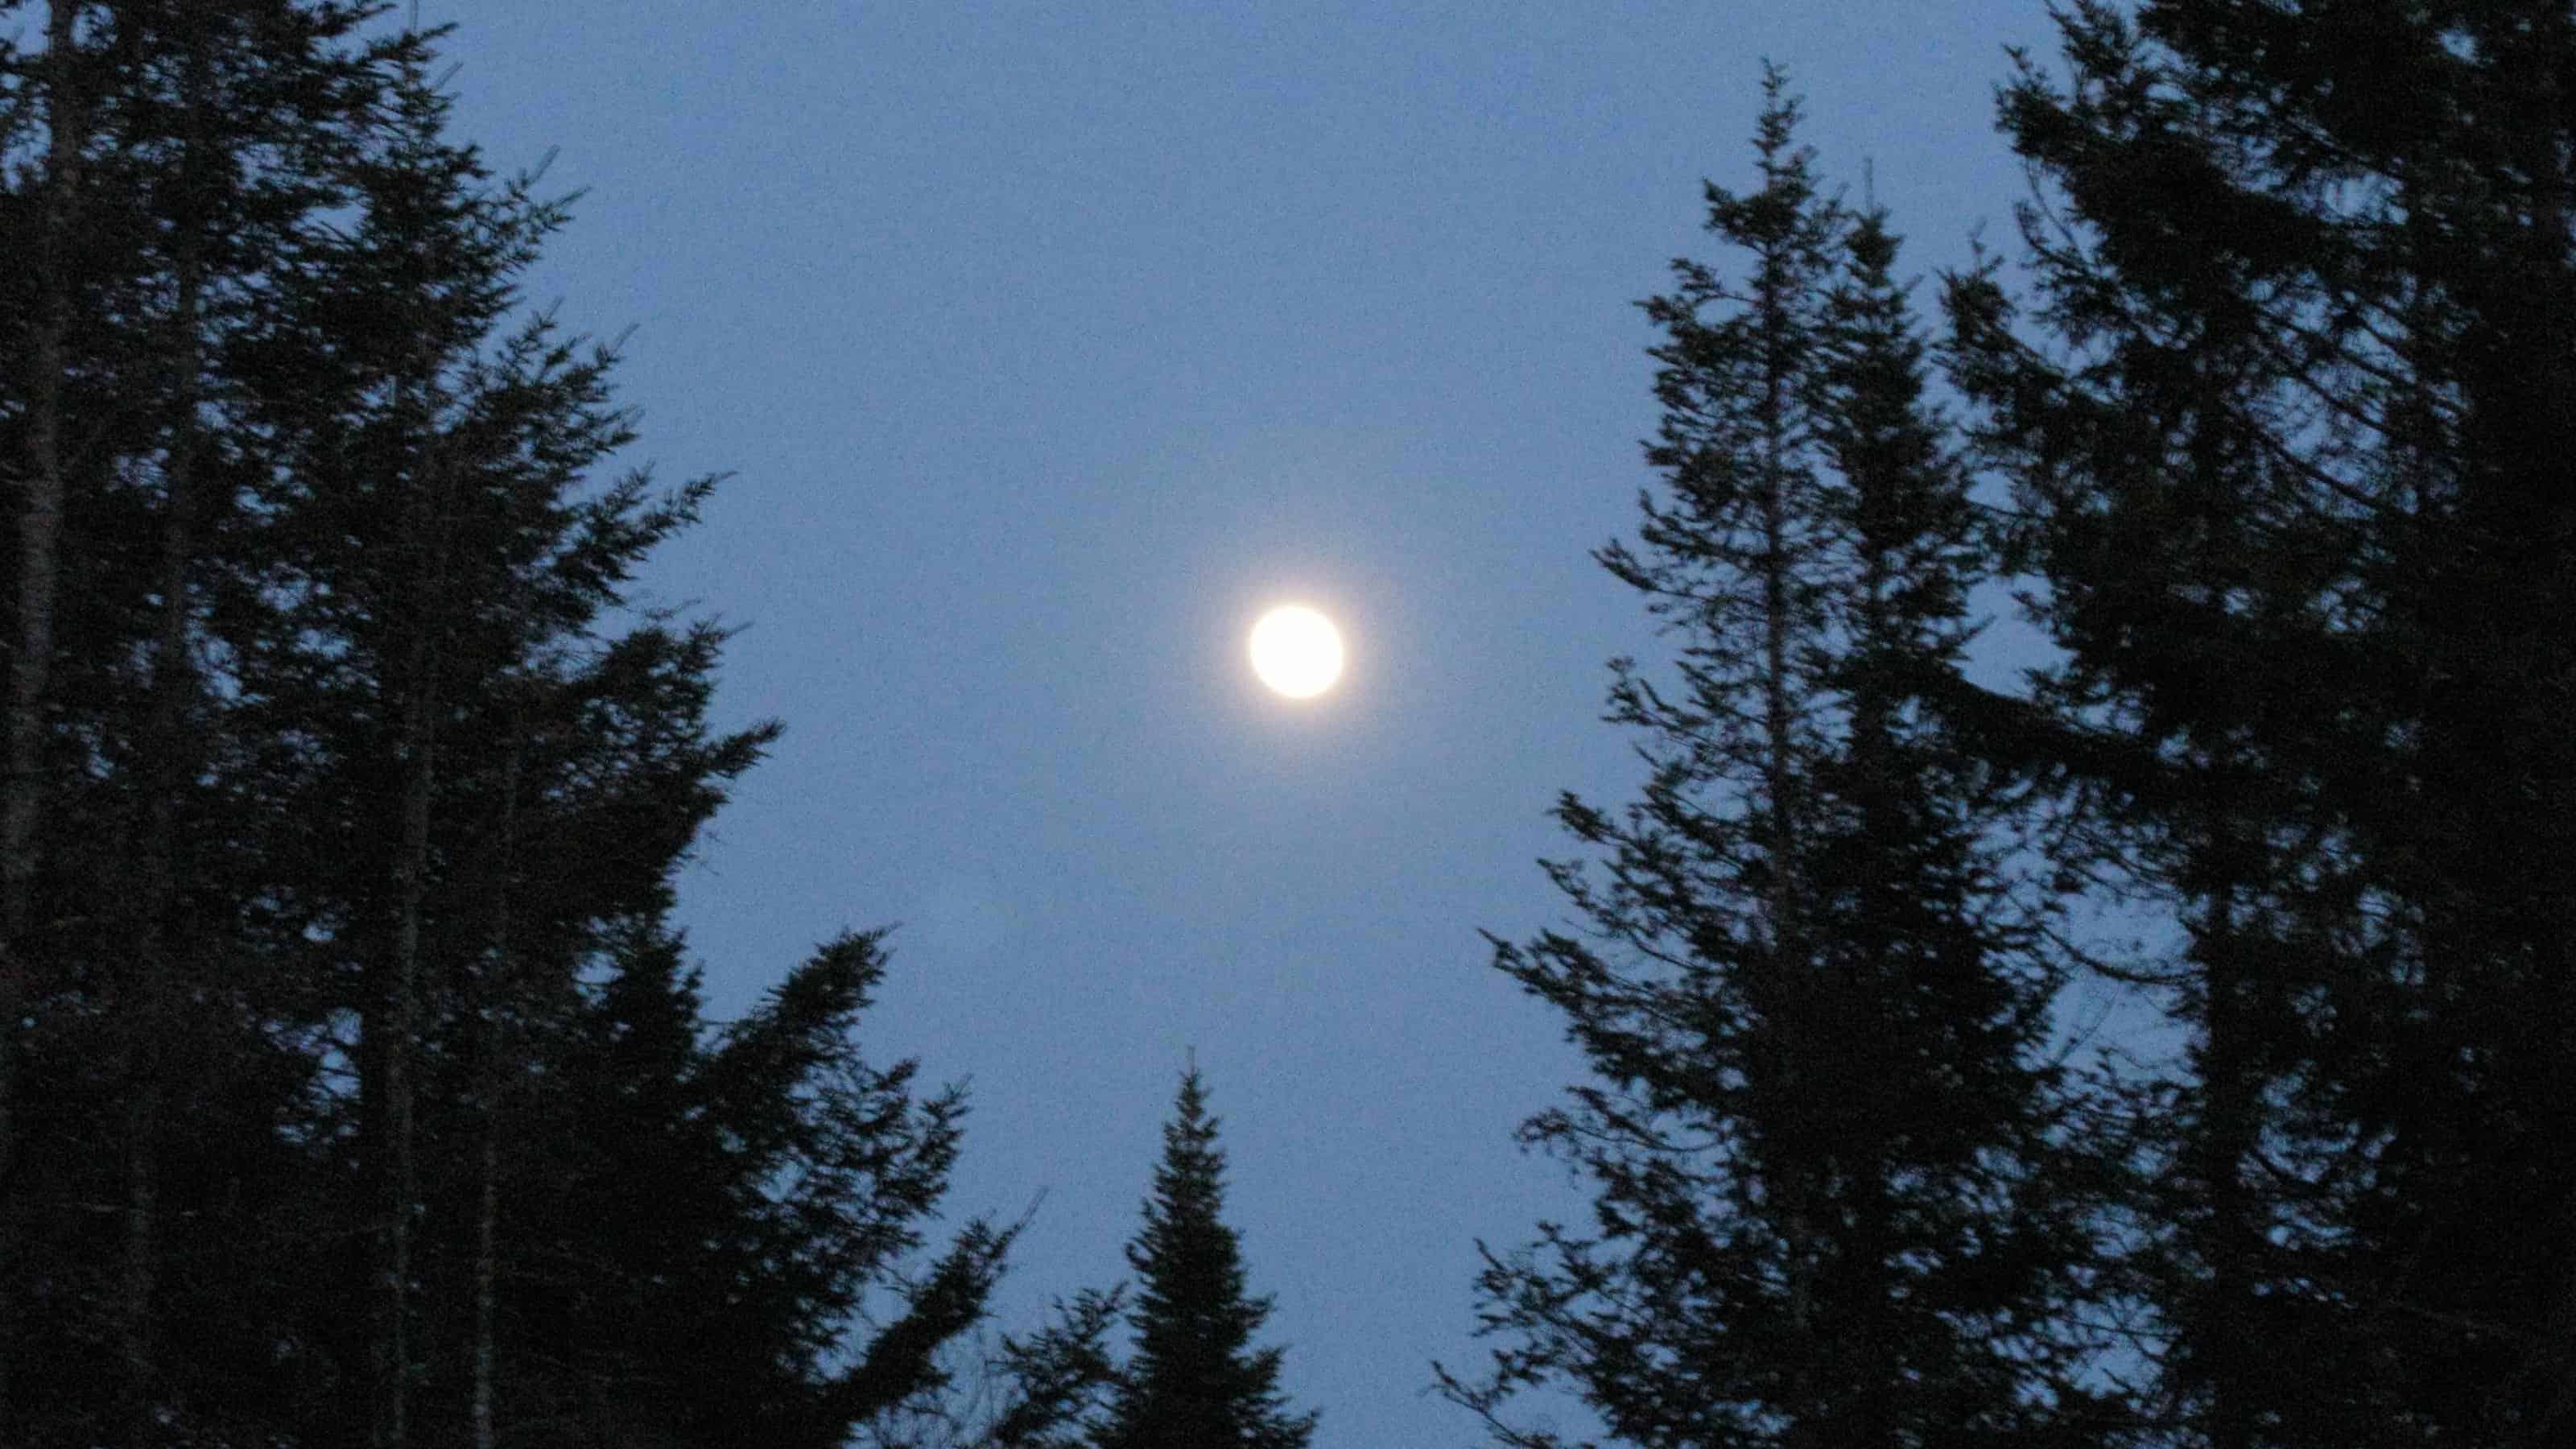 The full moon rises over Tamarack Hollow and the Hoosac mountain range.